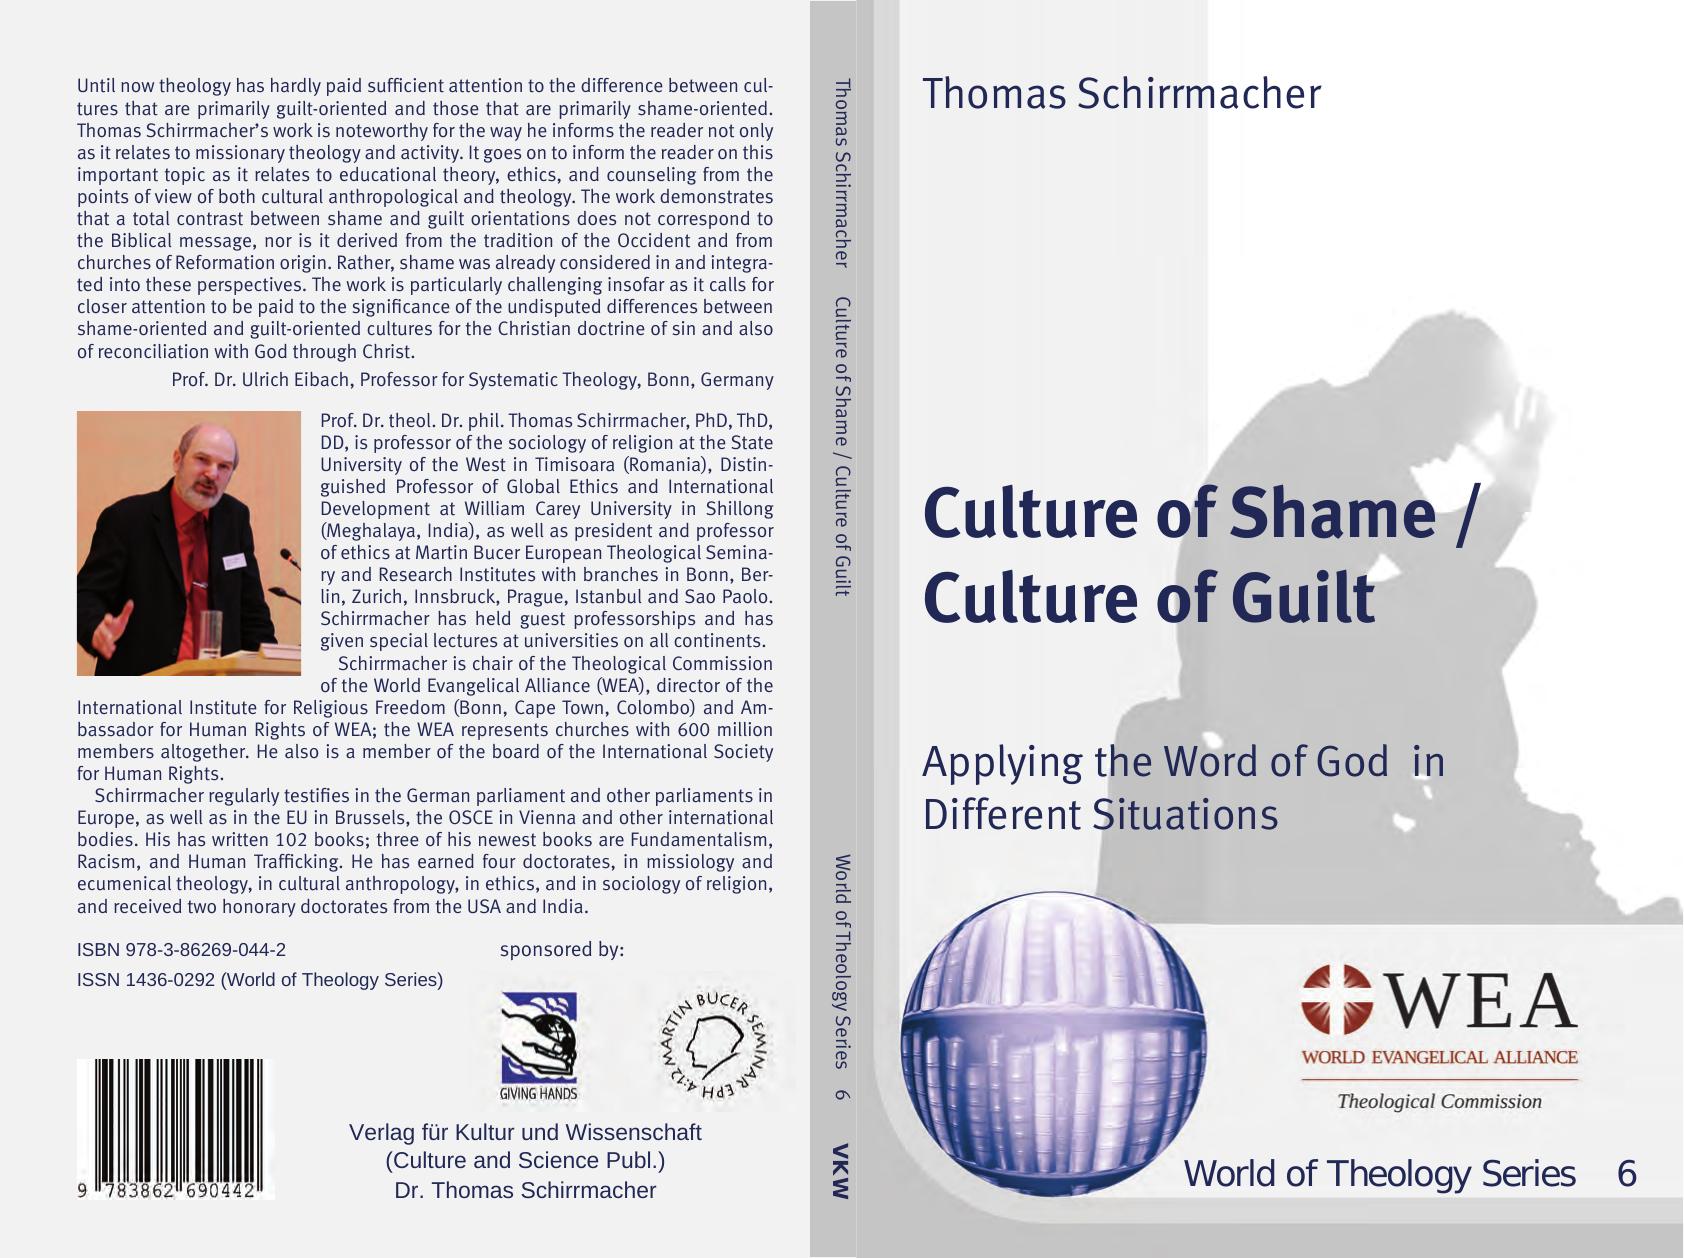 Culture of shame, culture of guilt